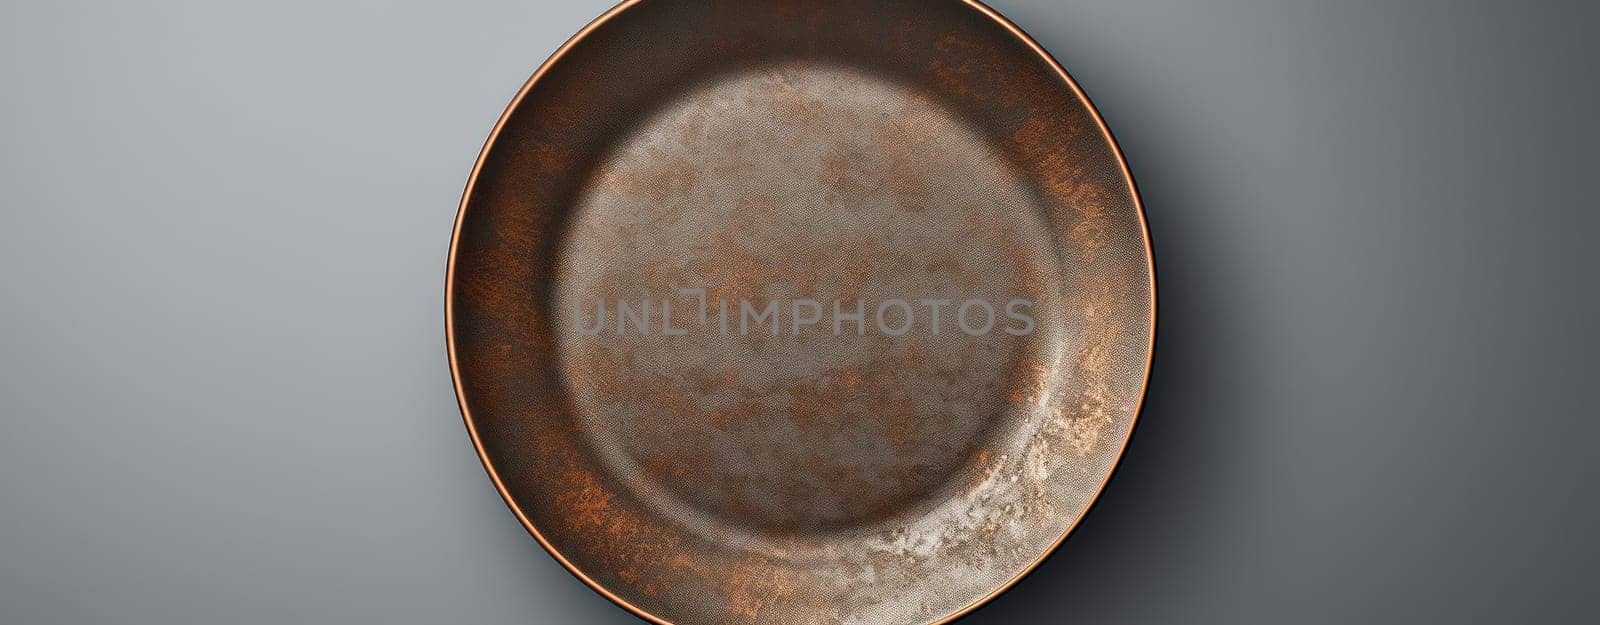 Empty Round Ceramic Dish on Clean Black Table - Rustic Kitchenware Design by Vichizh